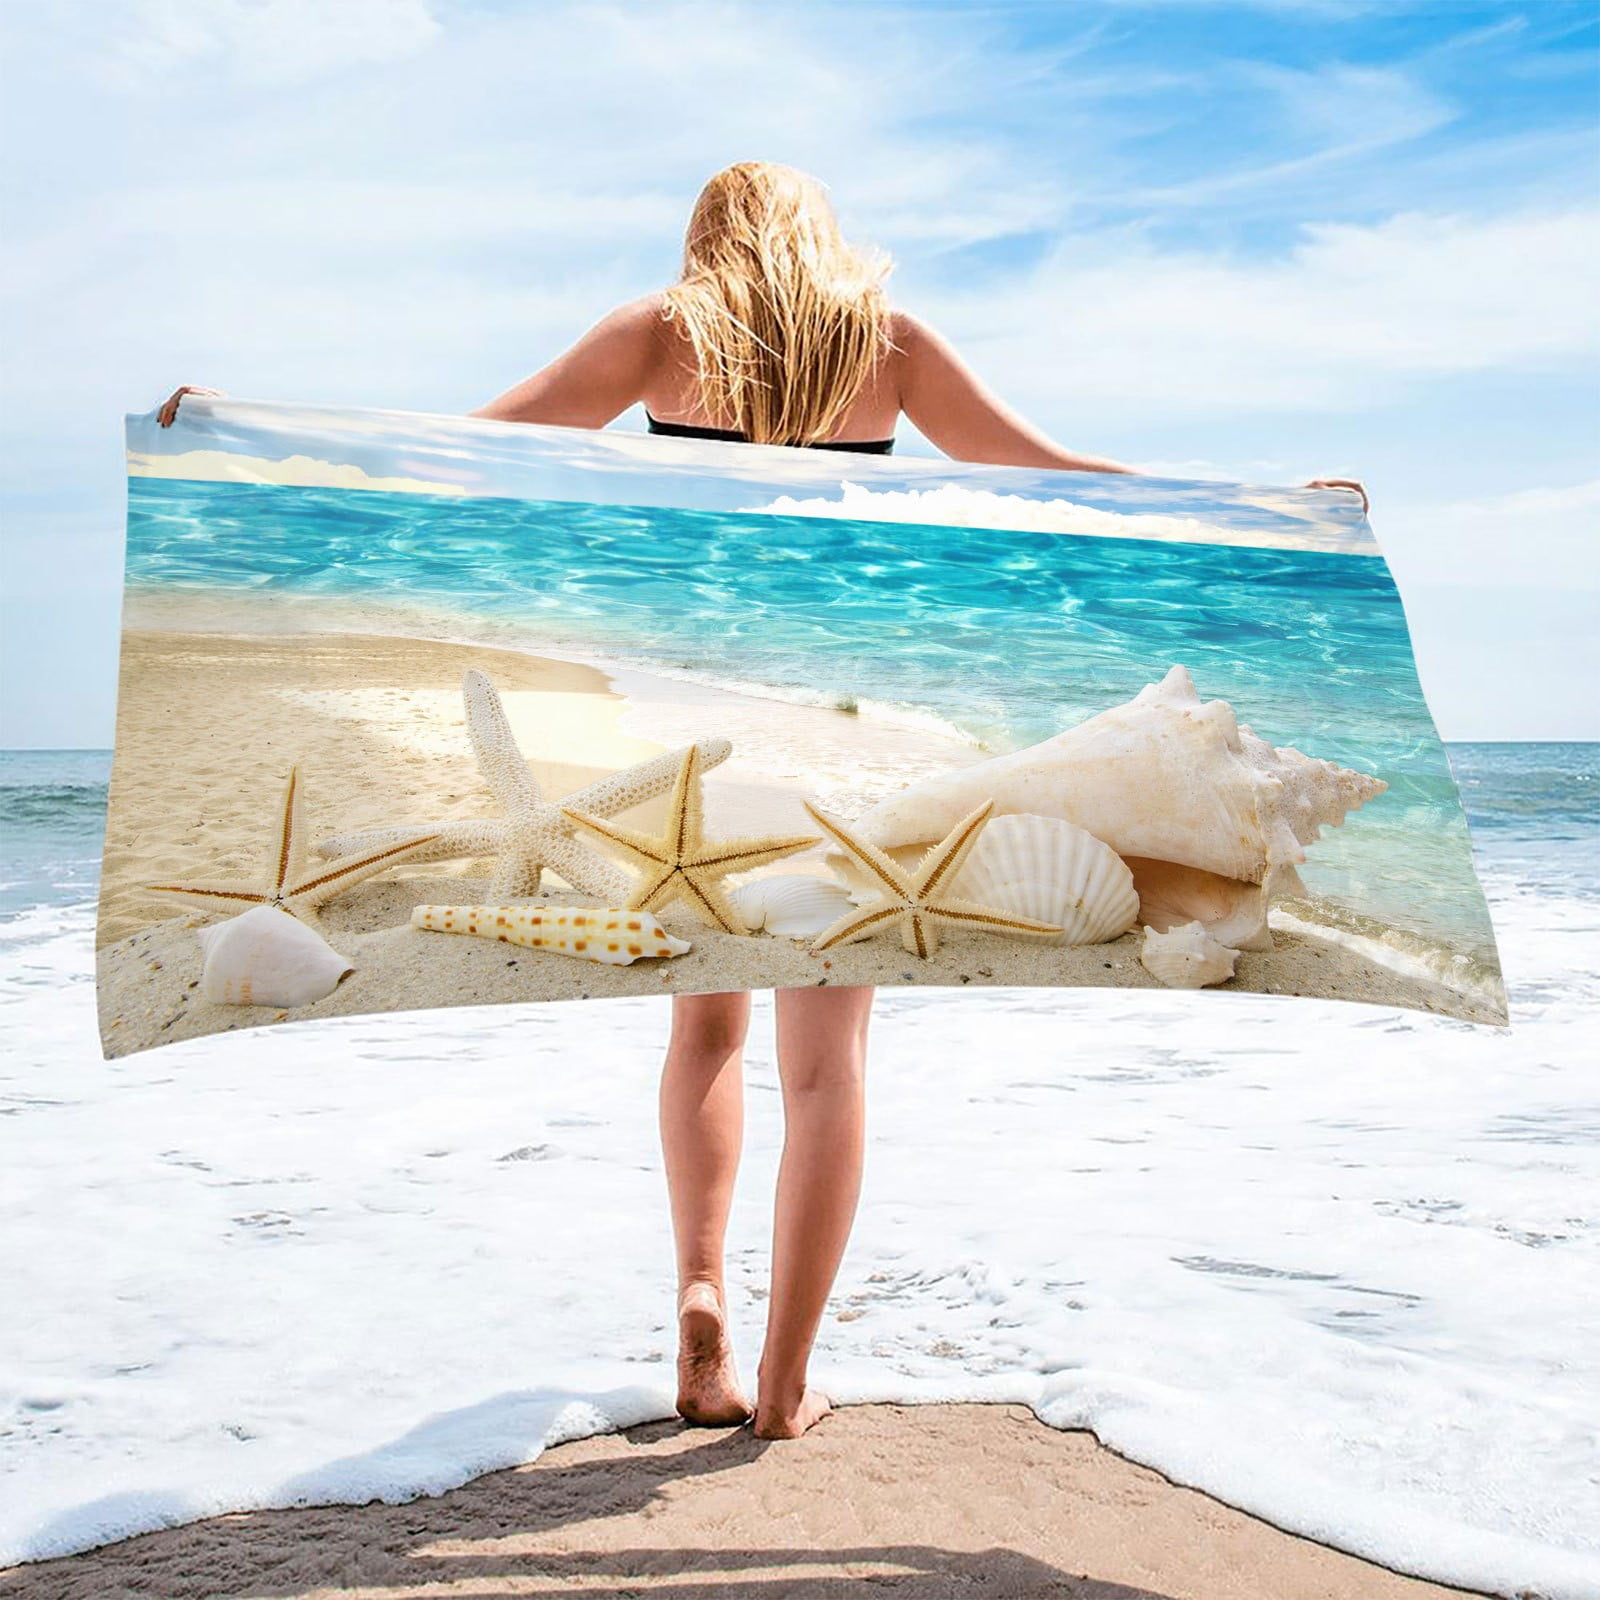  Seashell Bath Mat Towels, Highly Absorbent Softness